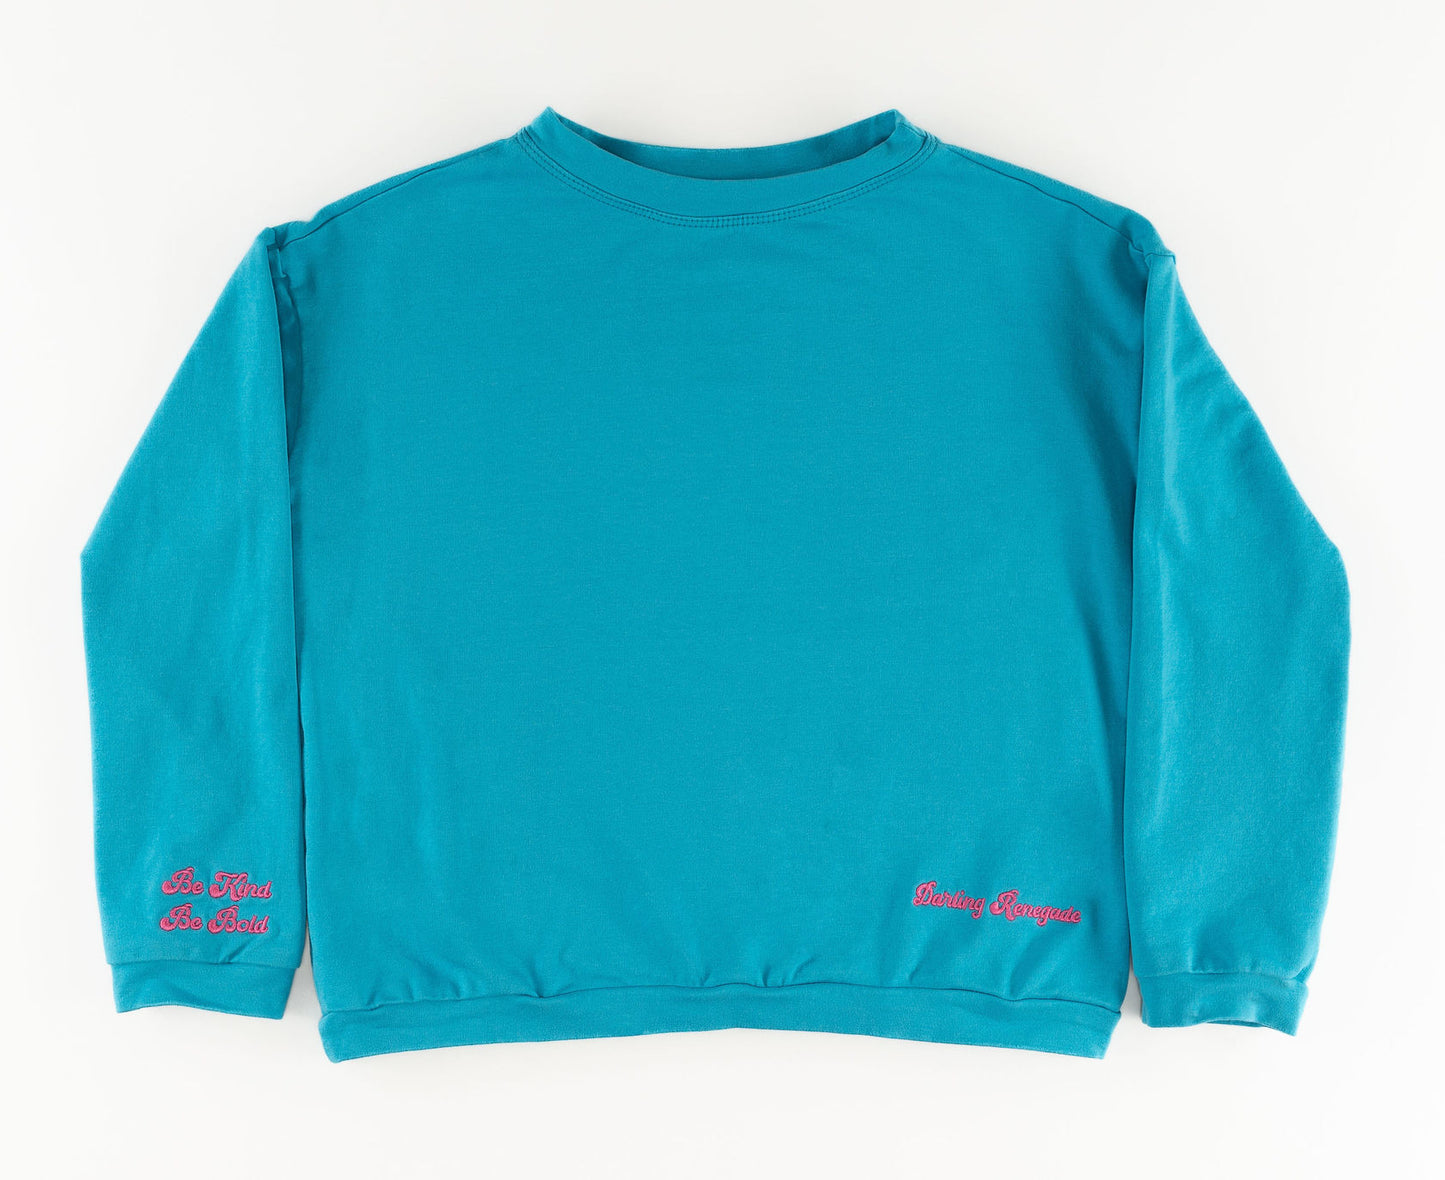 Signature Crewneck Sweatshirt in Blue/Pink